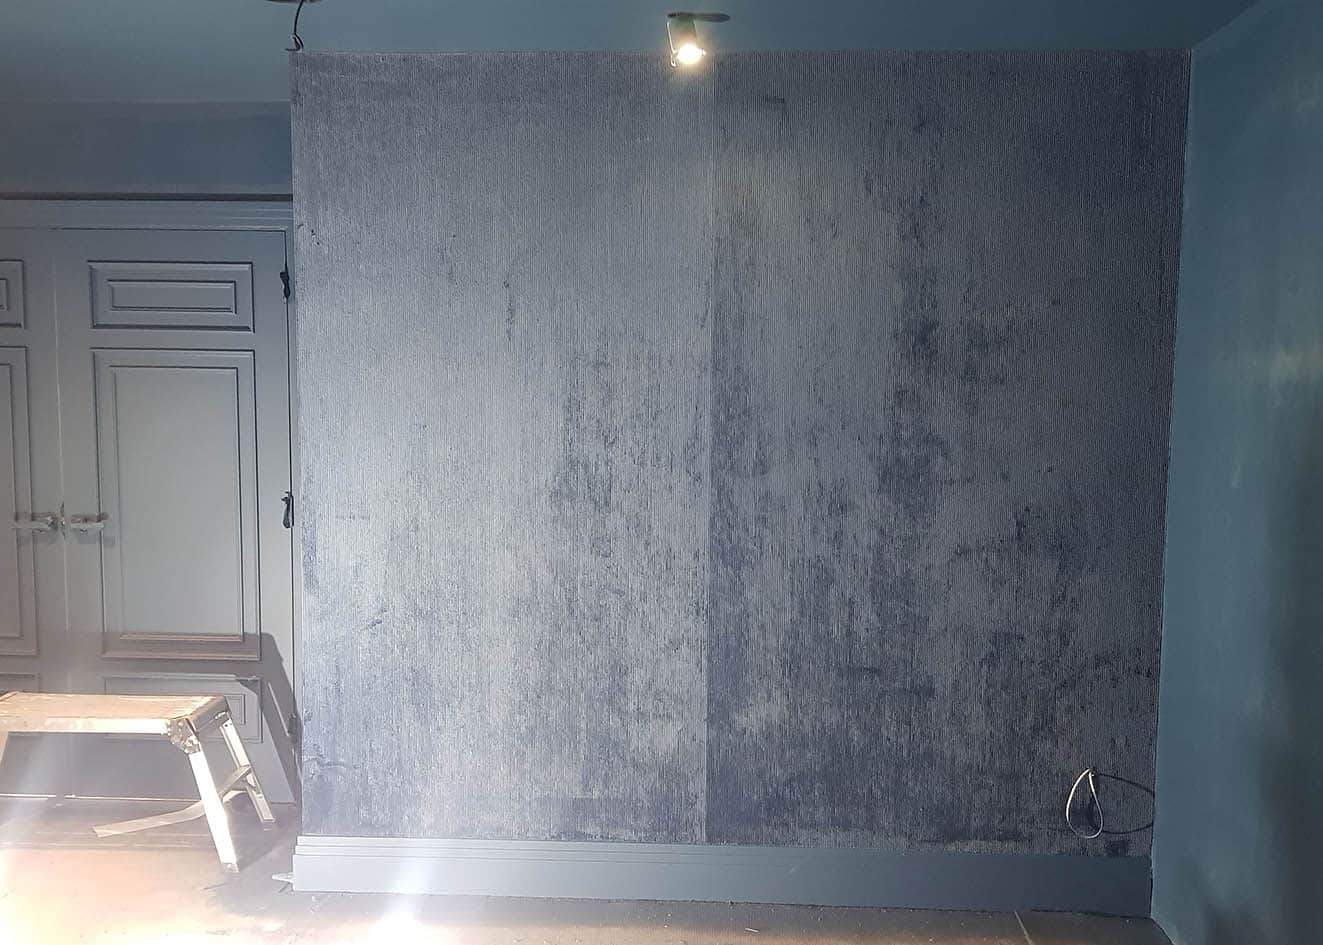 Arte Lush Corduroy wallpaper installed in a home cinema room by Bluespec wallpaper hangers.